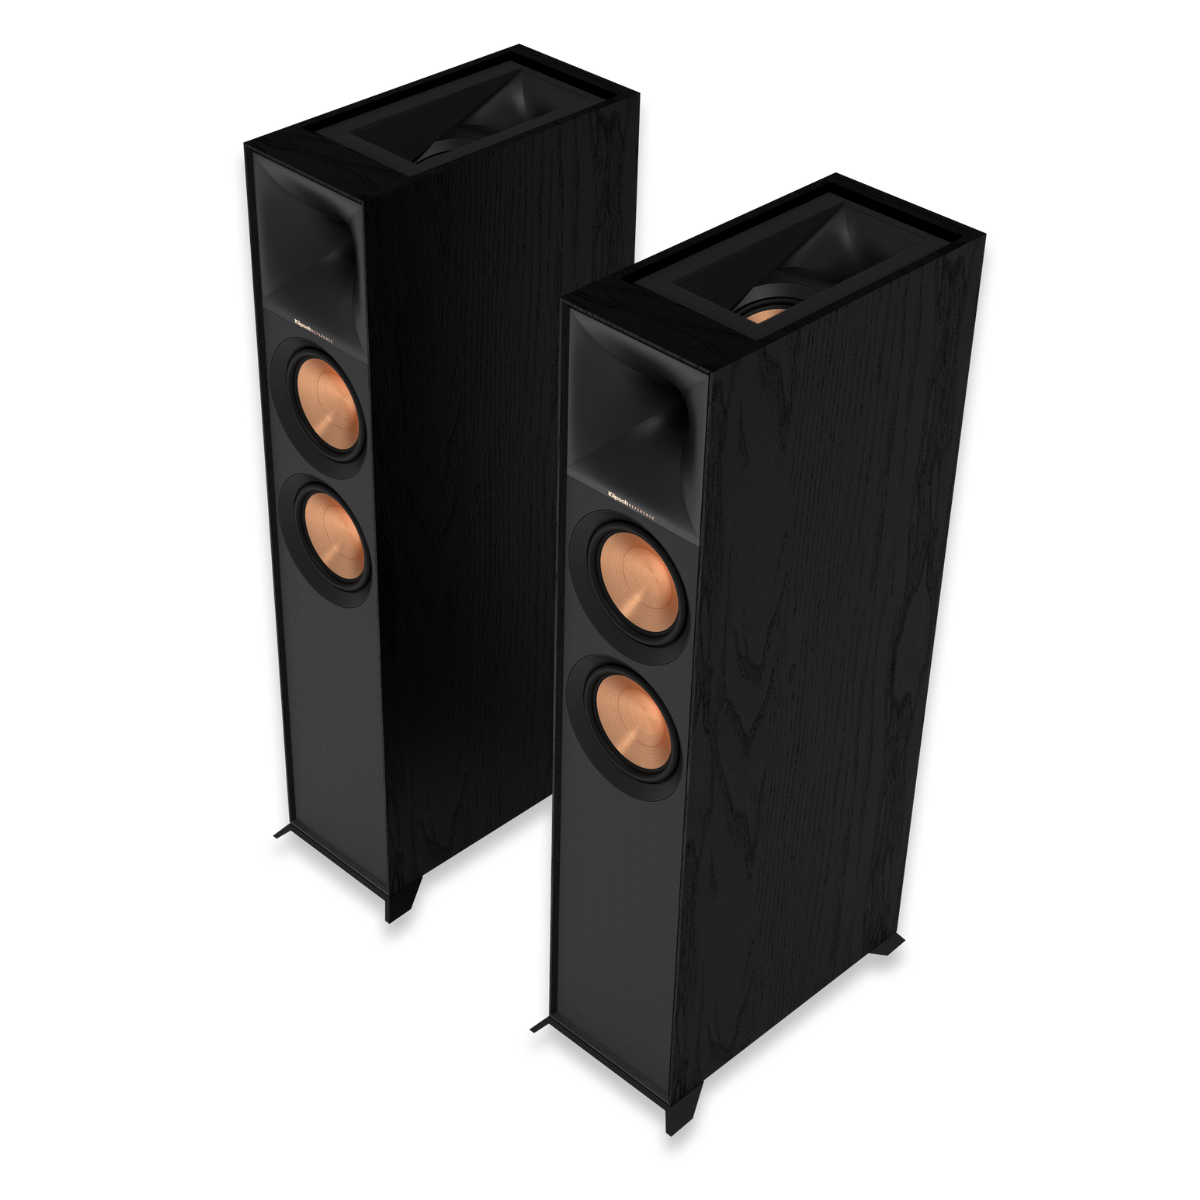 The Klipsch R-605FA Floorstanding Speakers on white background